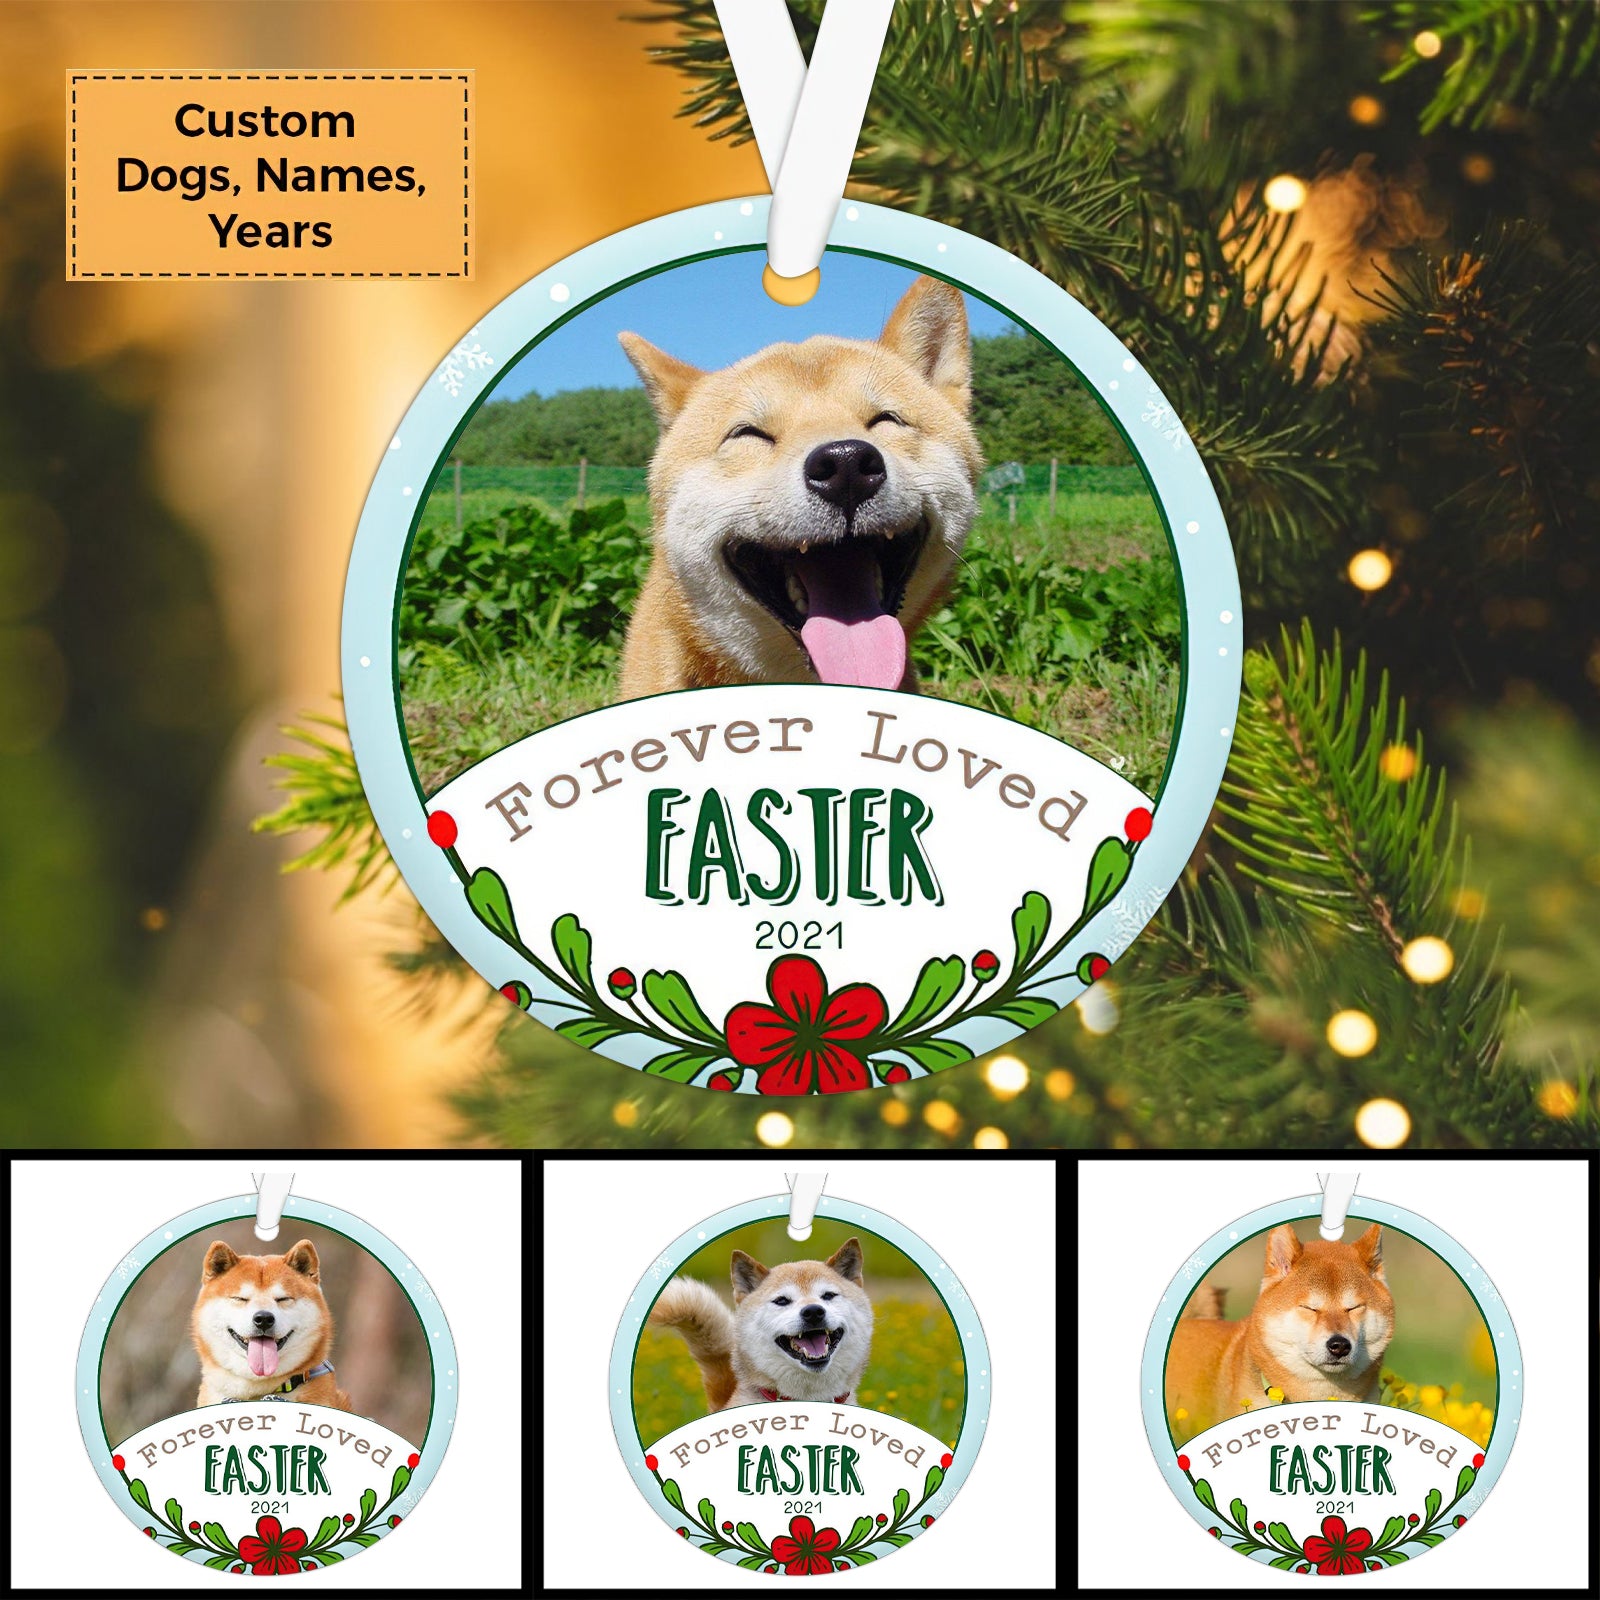 Custom Dog Photo Ceramic Ornament, Custom Pet Photo Ornament, Forever Loved Pet Custom Ornament - Christmas Ornament Gift For Dog Lovers, Pet Lovers